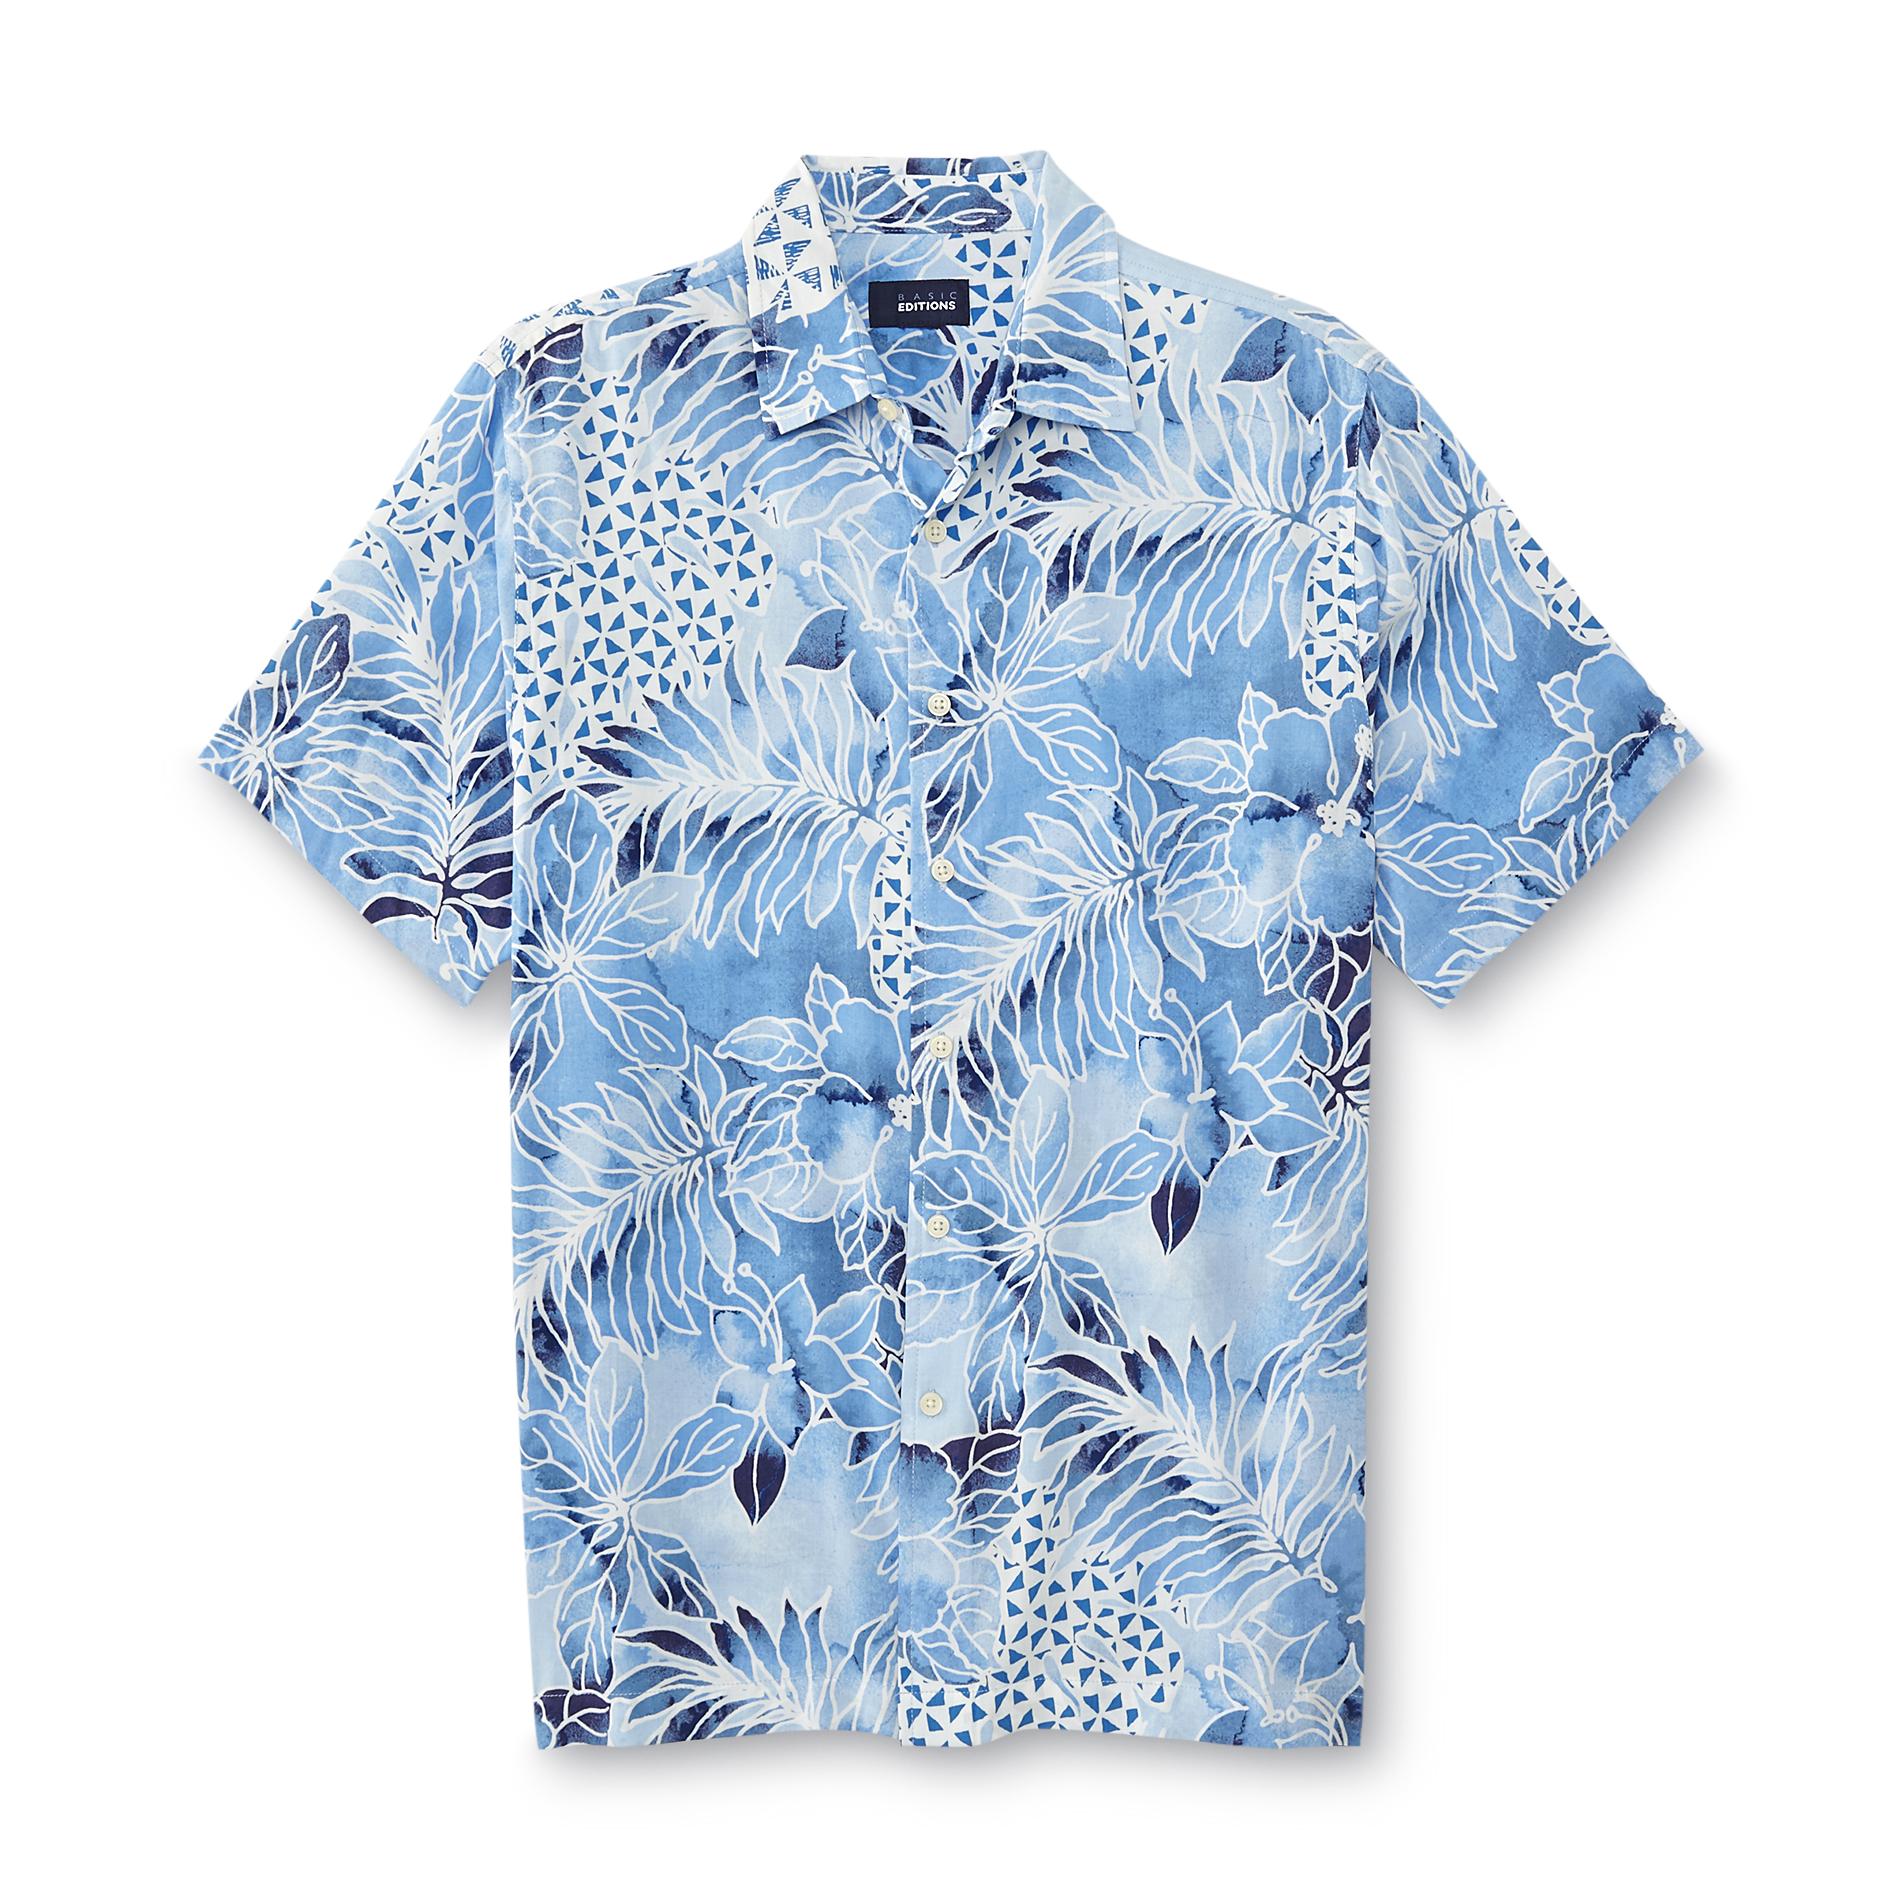 Basic Editions Men's Camp Shirt - Tropical